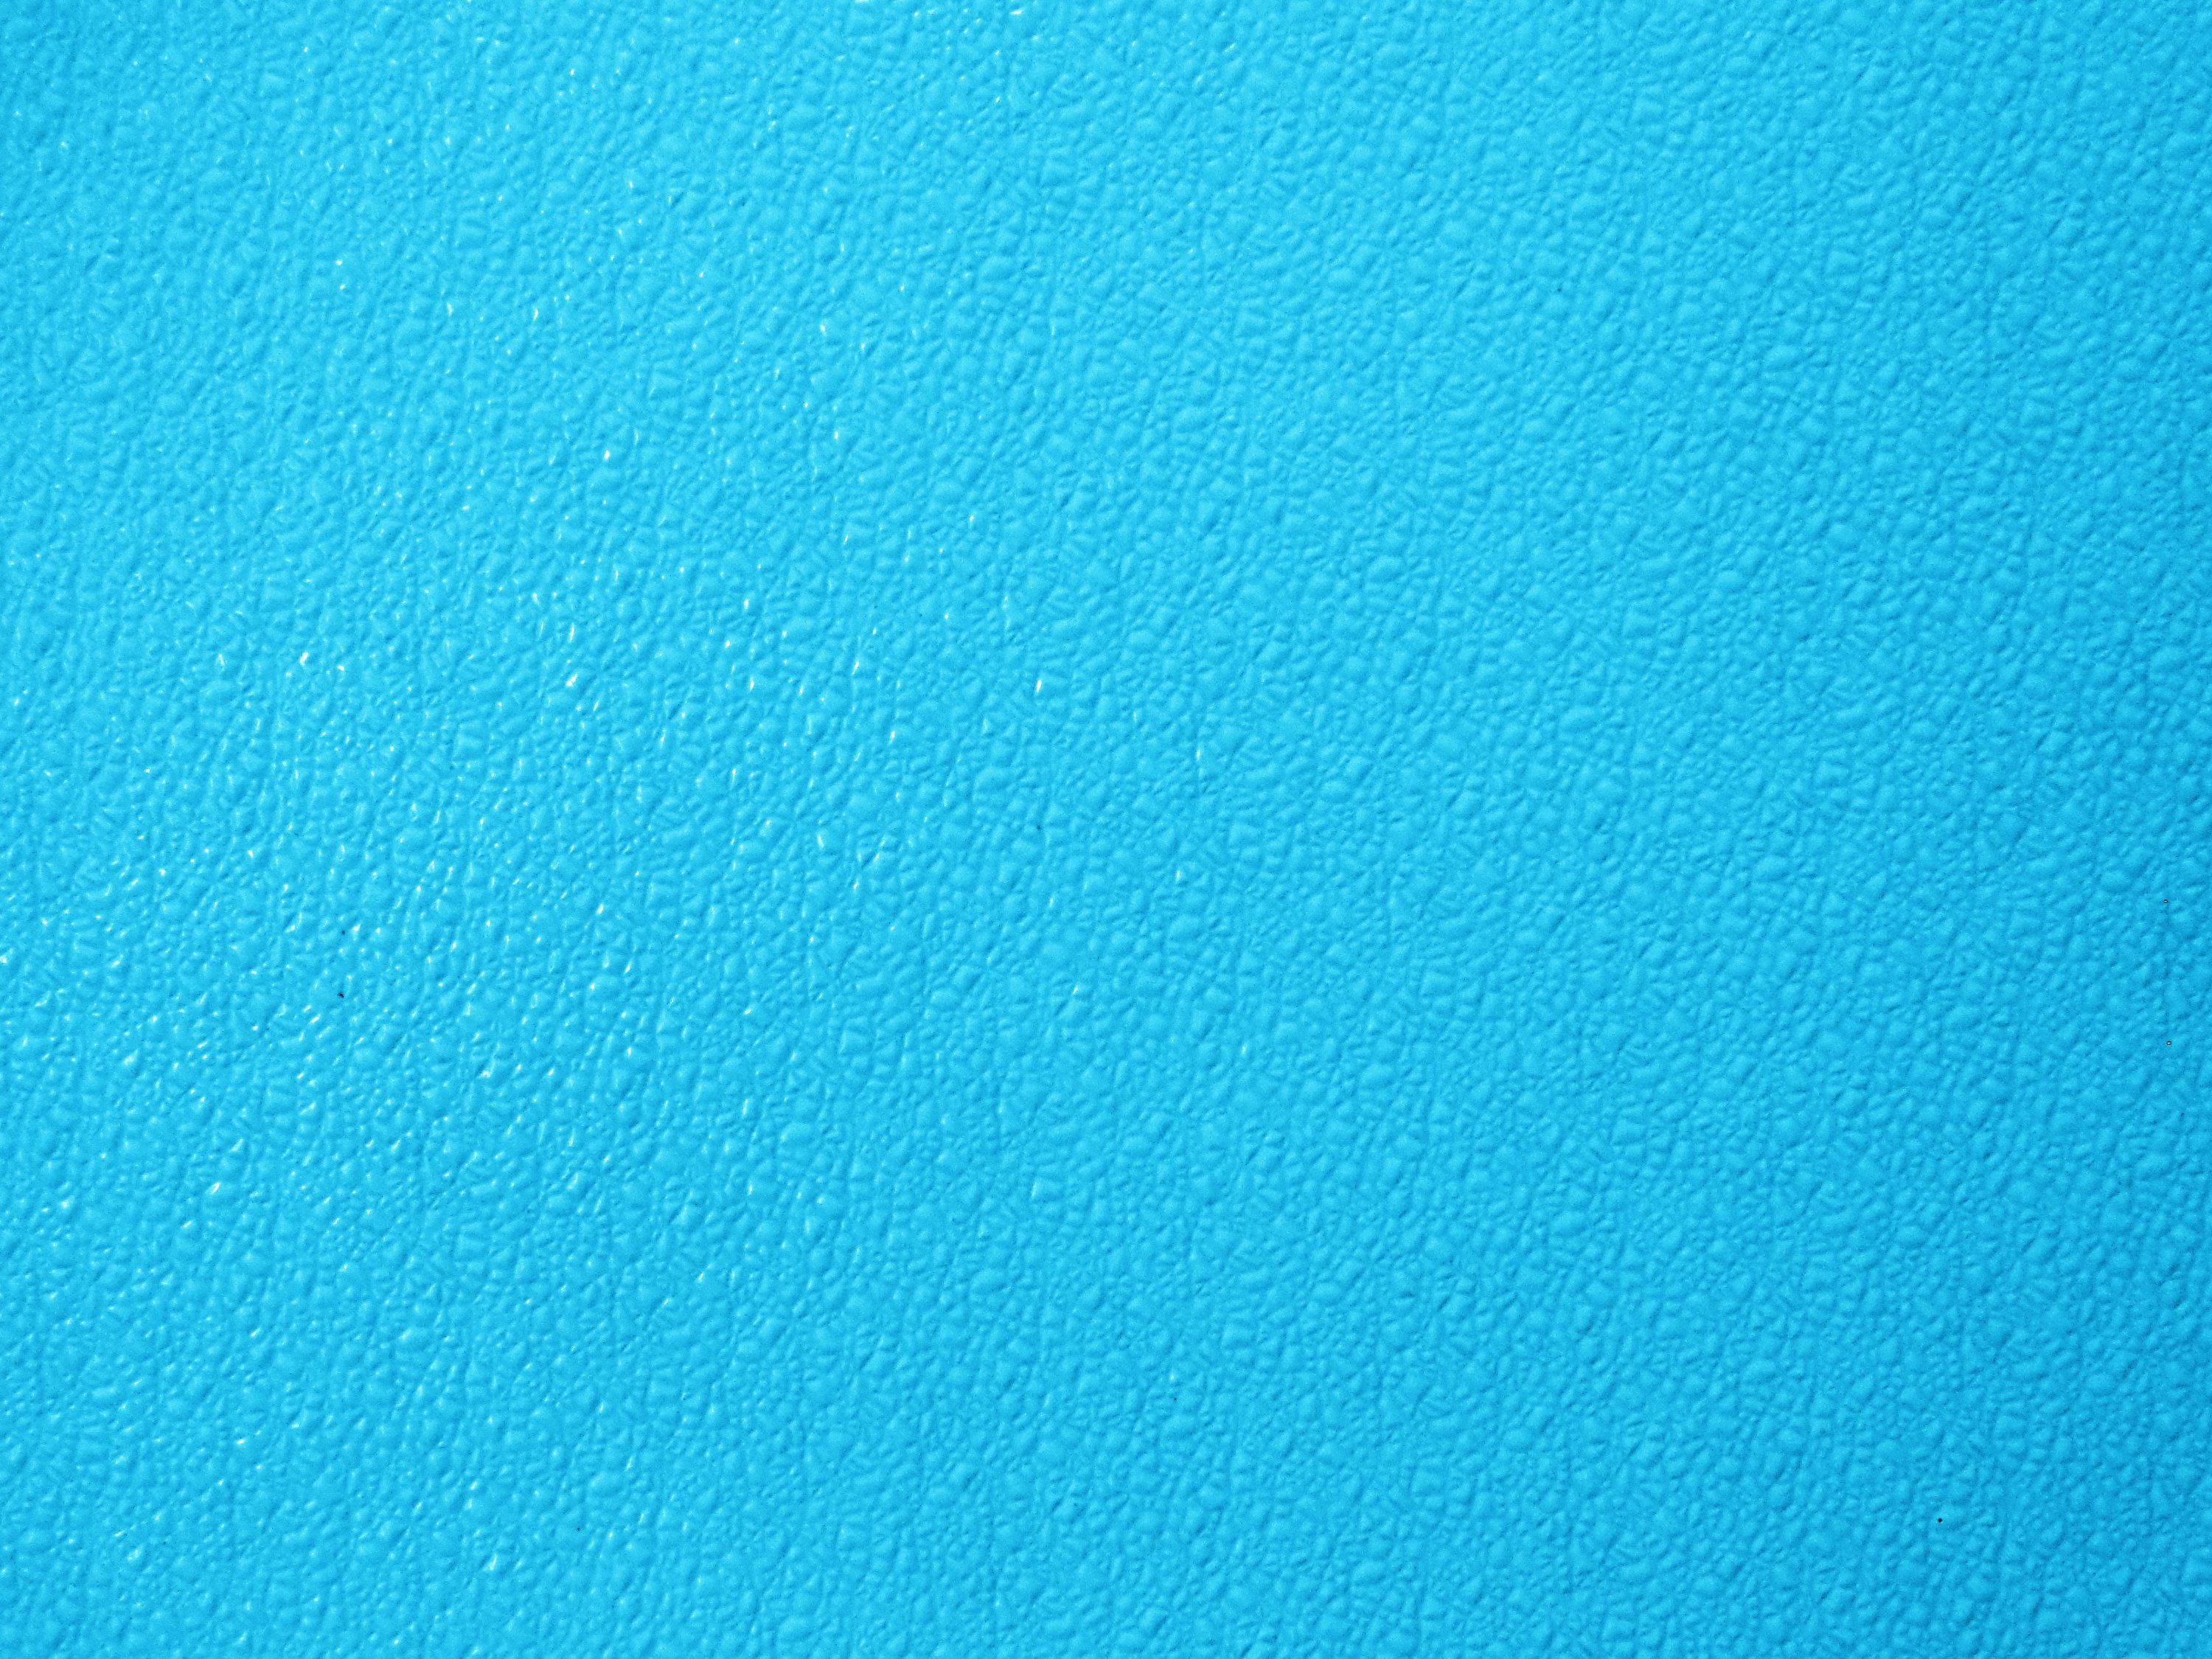 Bumpy Light Blue Plastic Texture Picture. Free Photograph. Photo